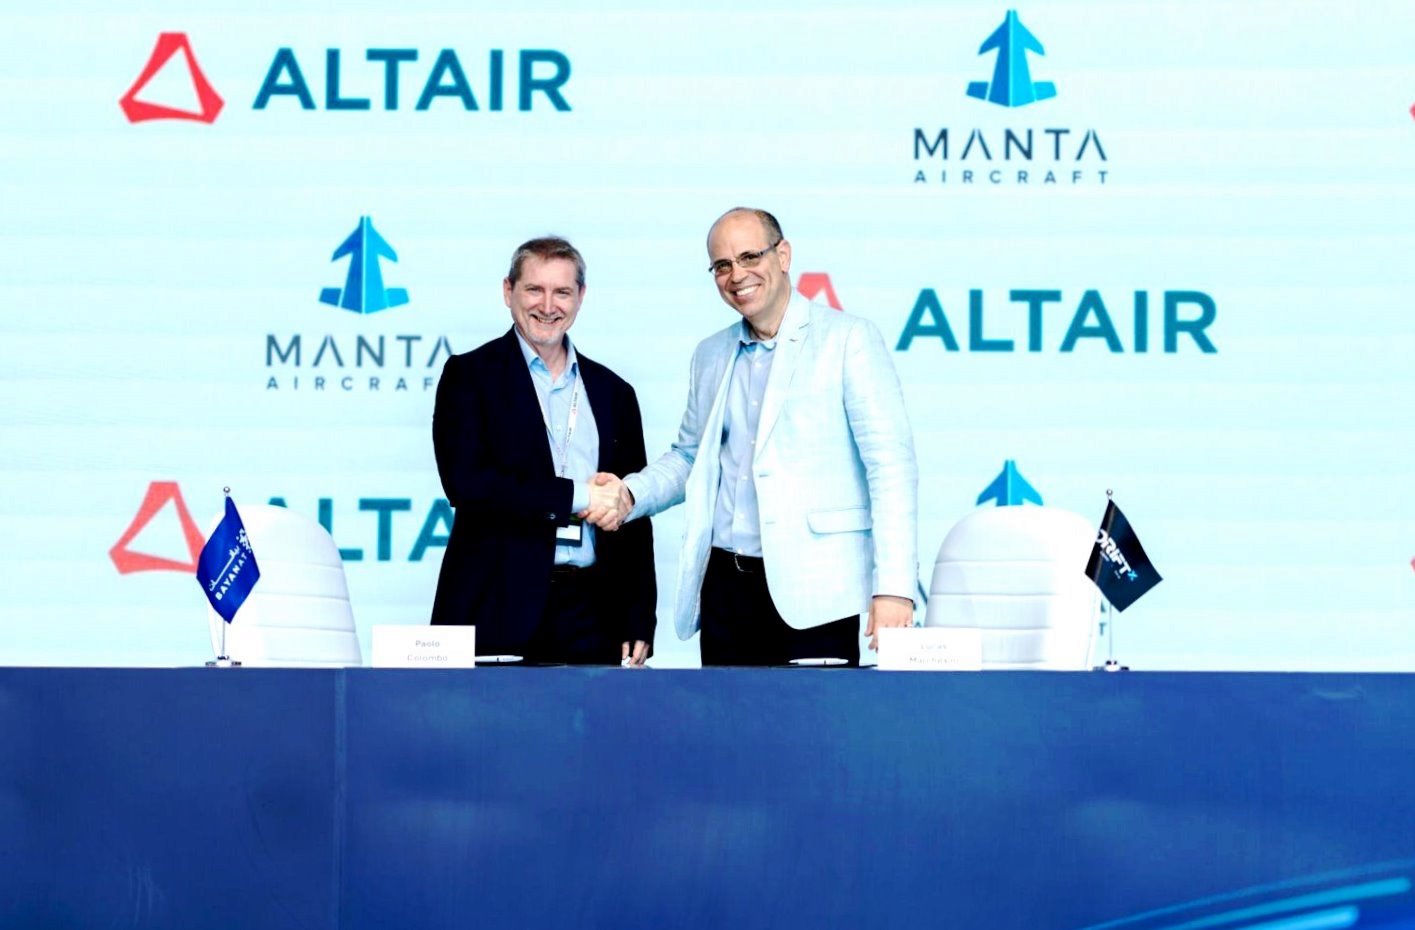 Altair to support Manta Aircraft’s ANN